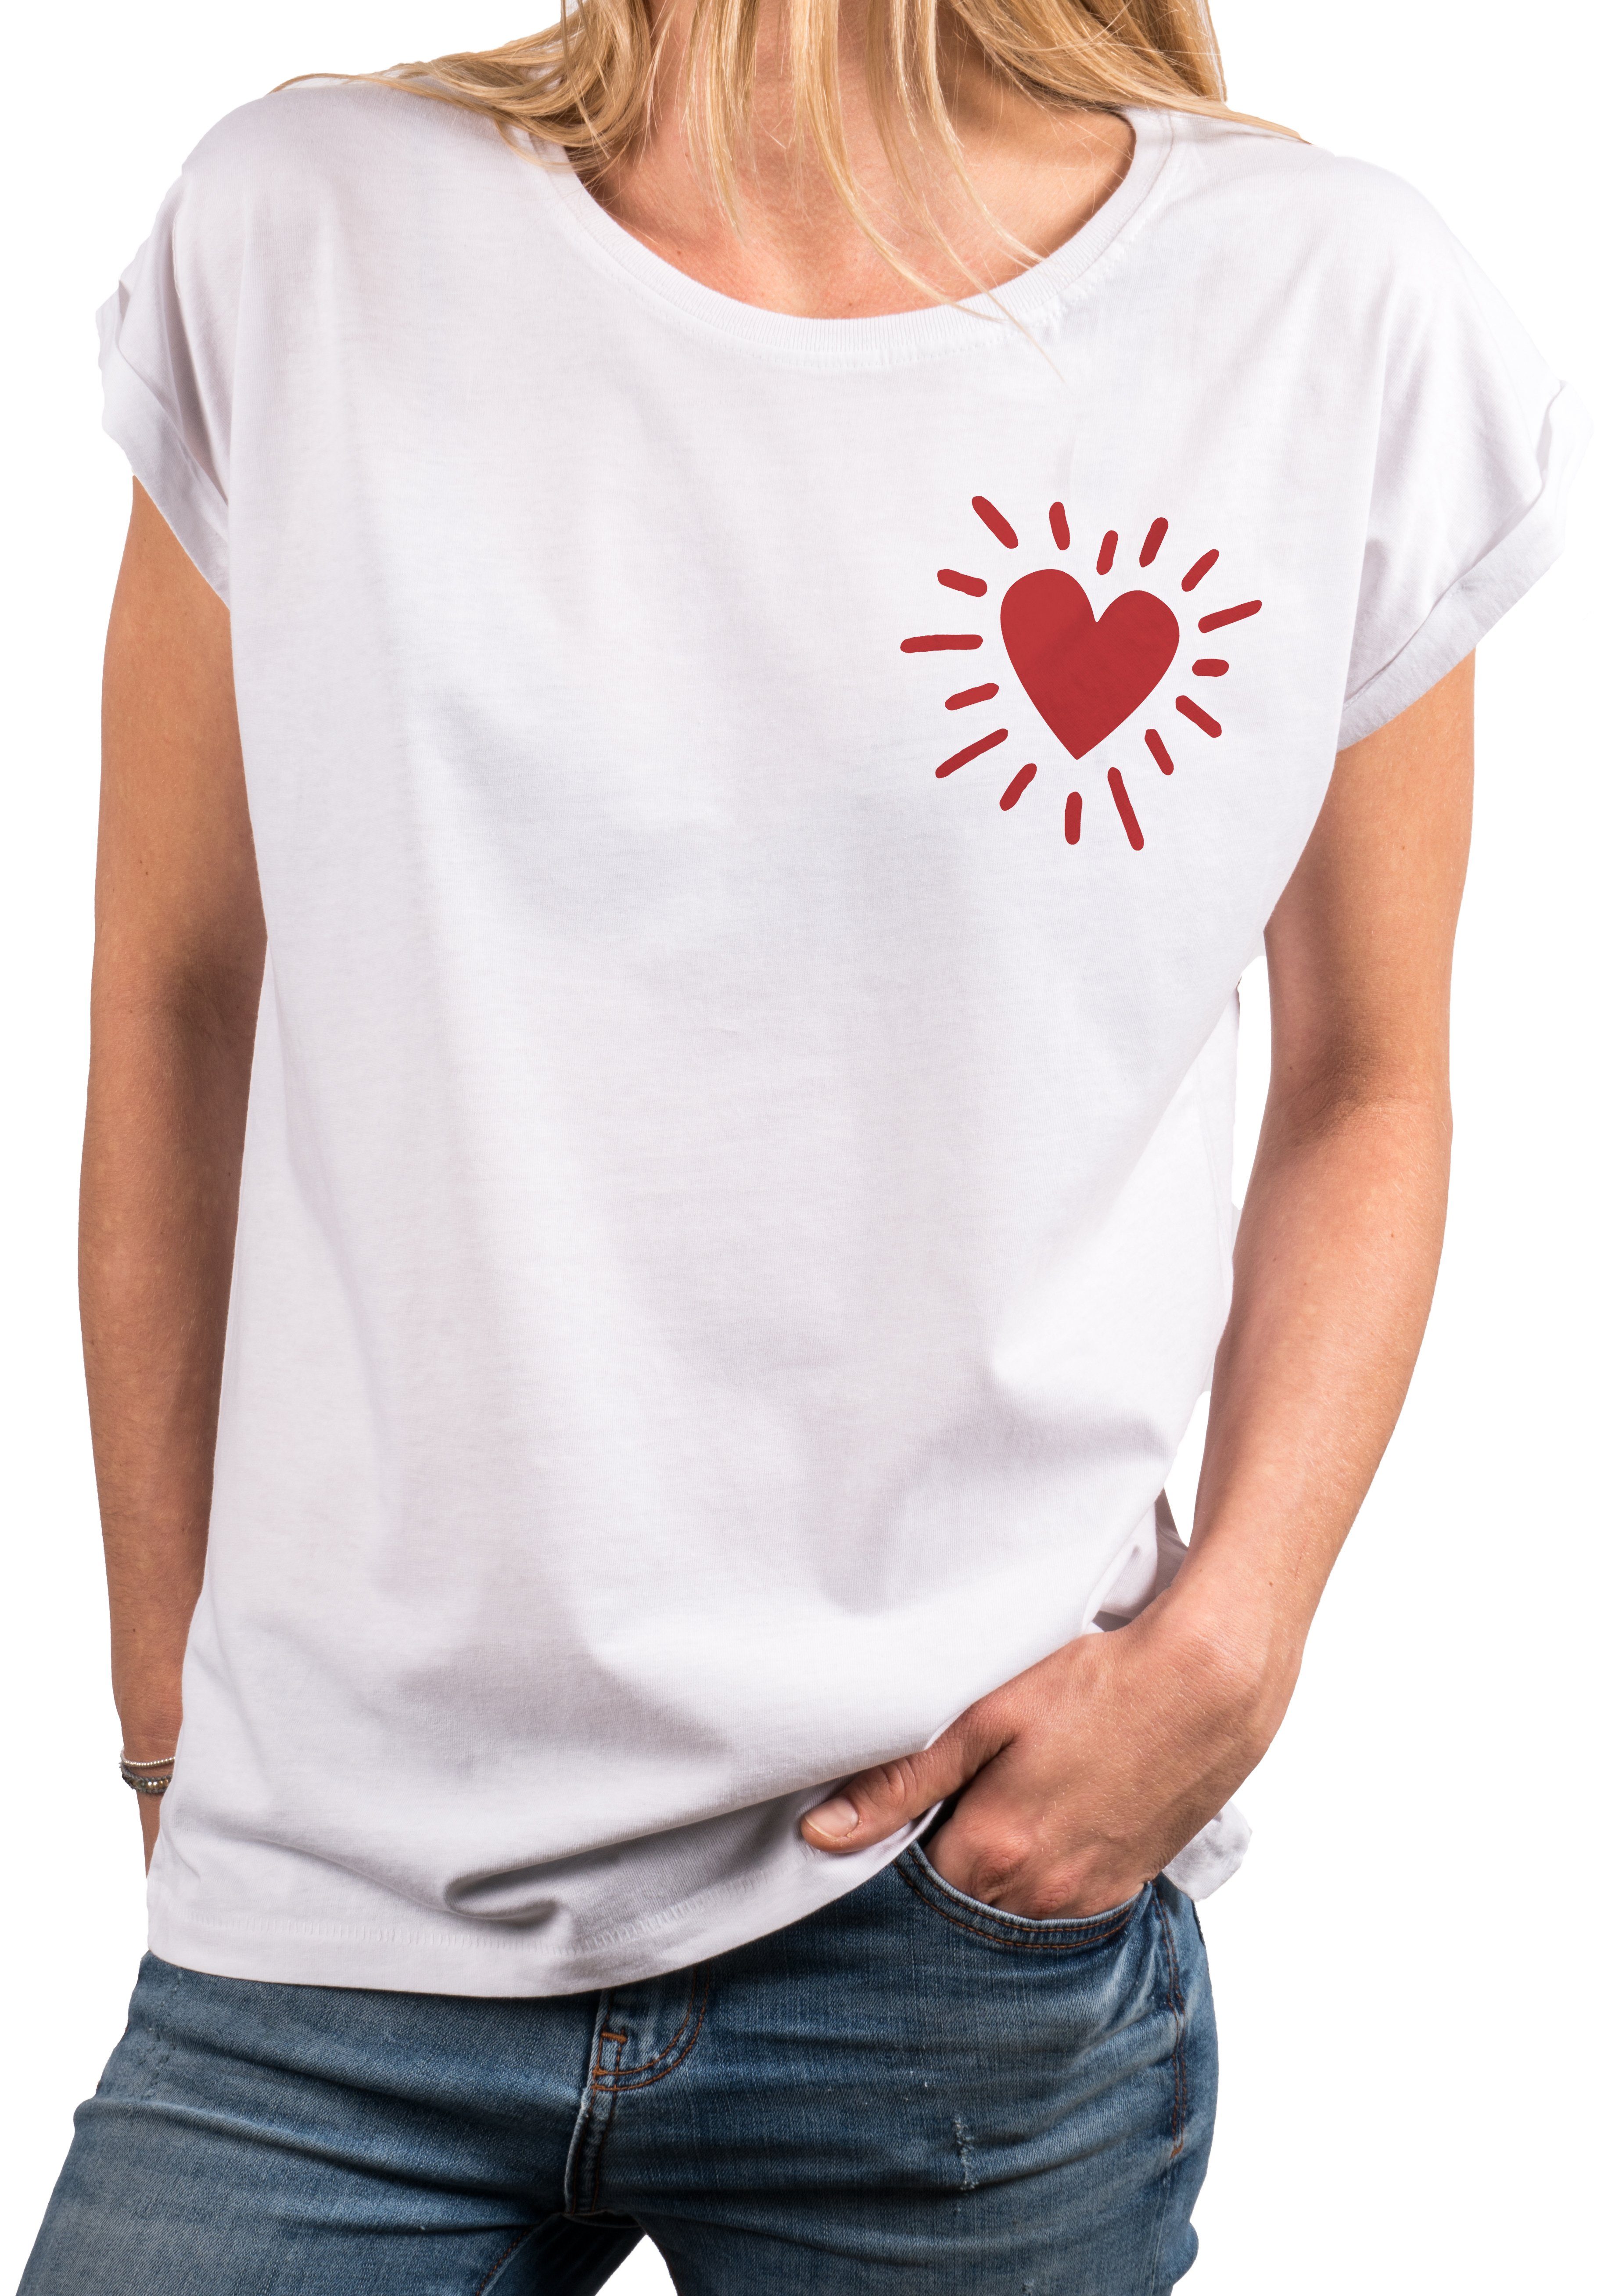 MAKAYA Print-Shirt Damen Kurzam Top Baumwolle Herz Motiv Druck Aufdruck Heart Herzen Modische Oberteile, Frauen